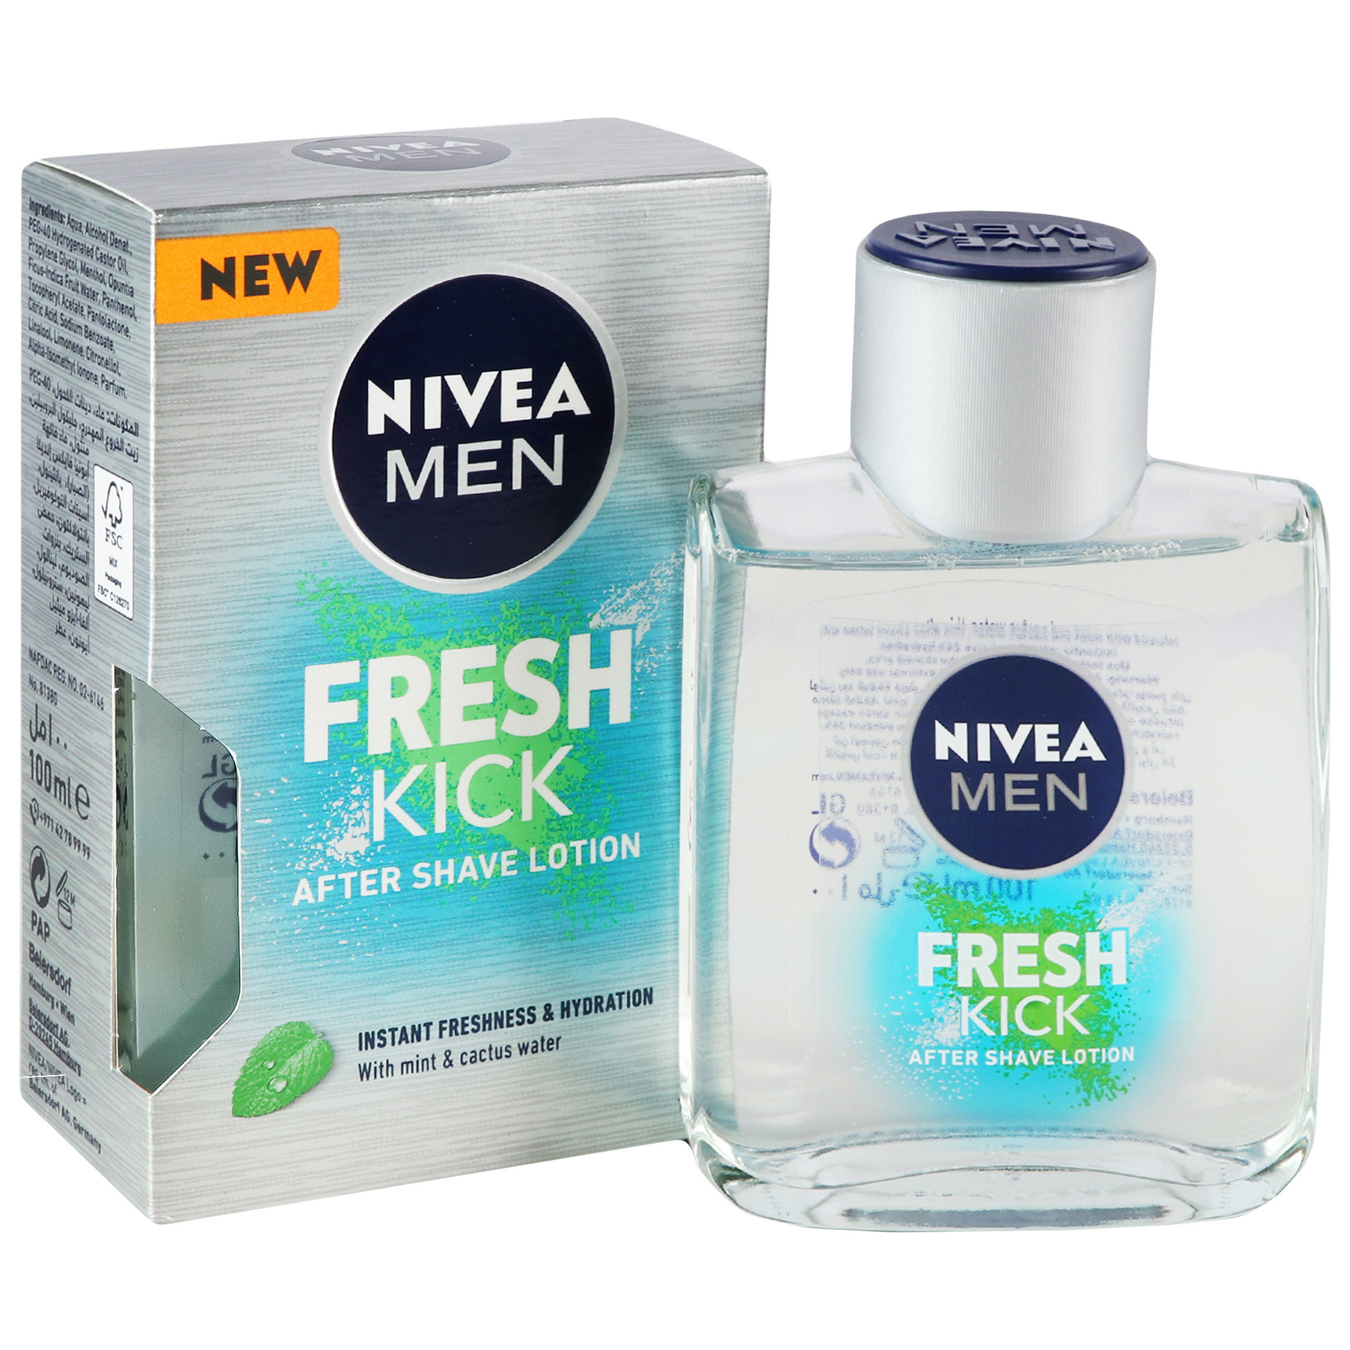 Nivea fresh kick men aftershave lotion 100 ml 2